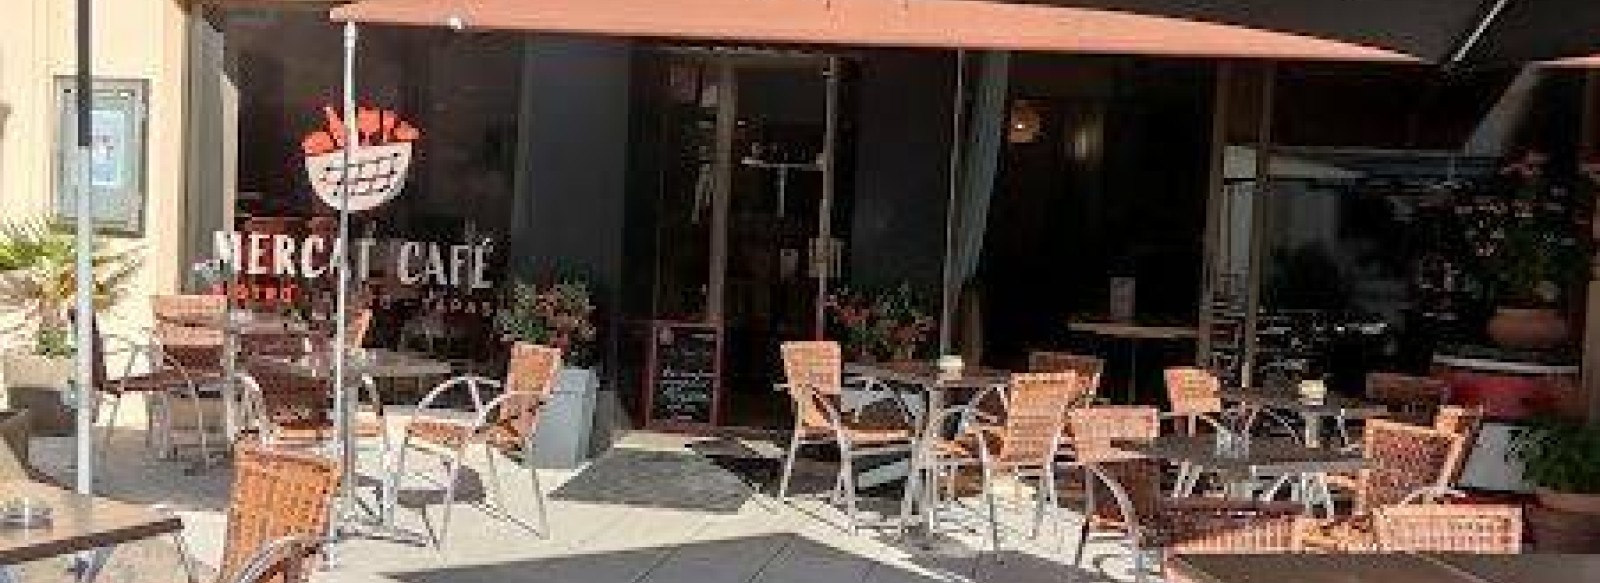 Restaurant - Le Mercat Cafe